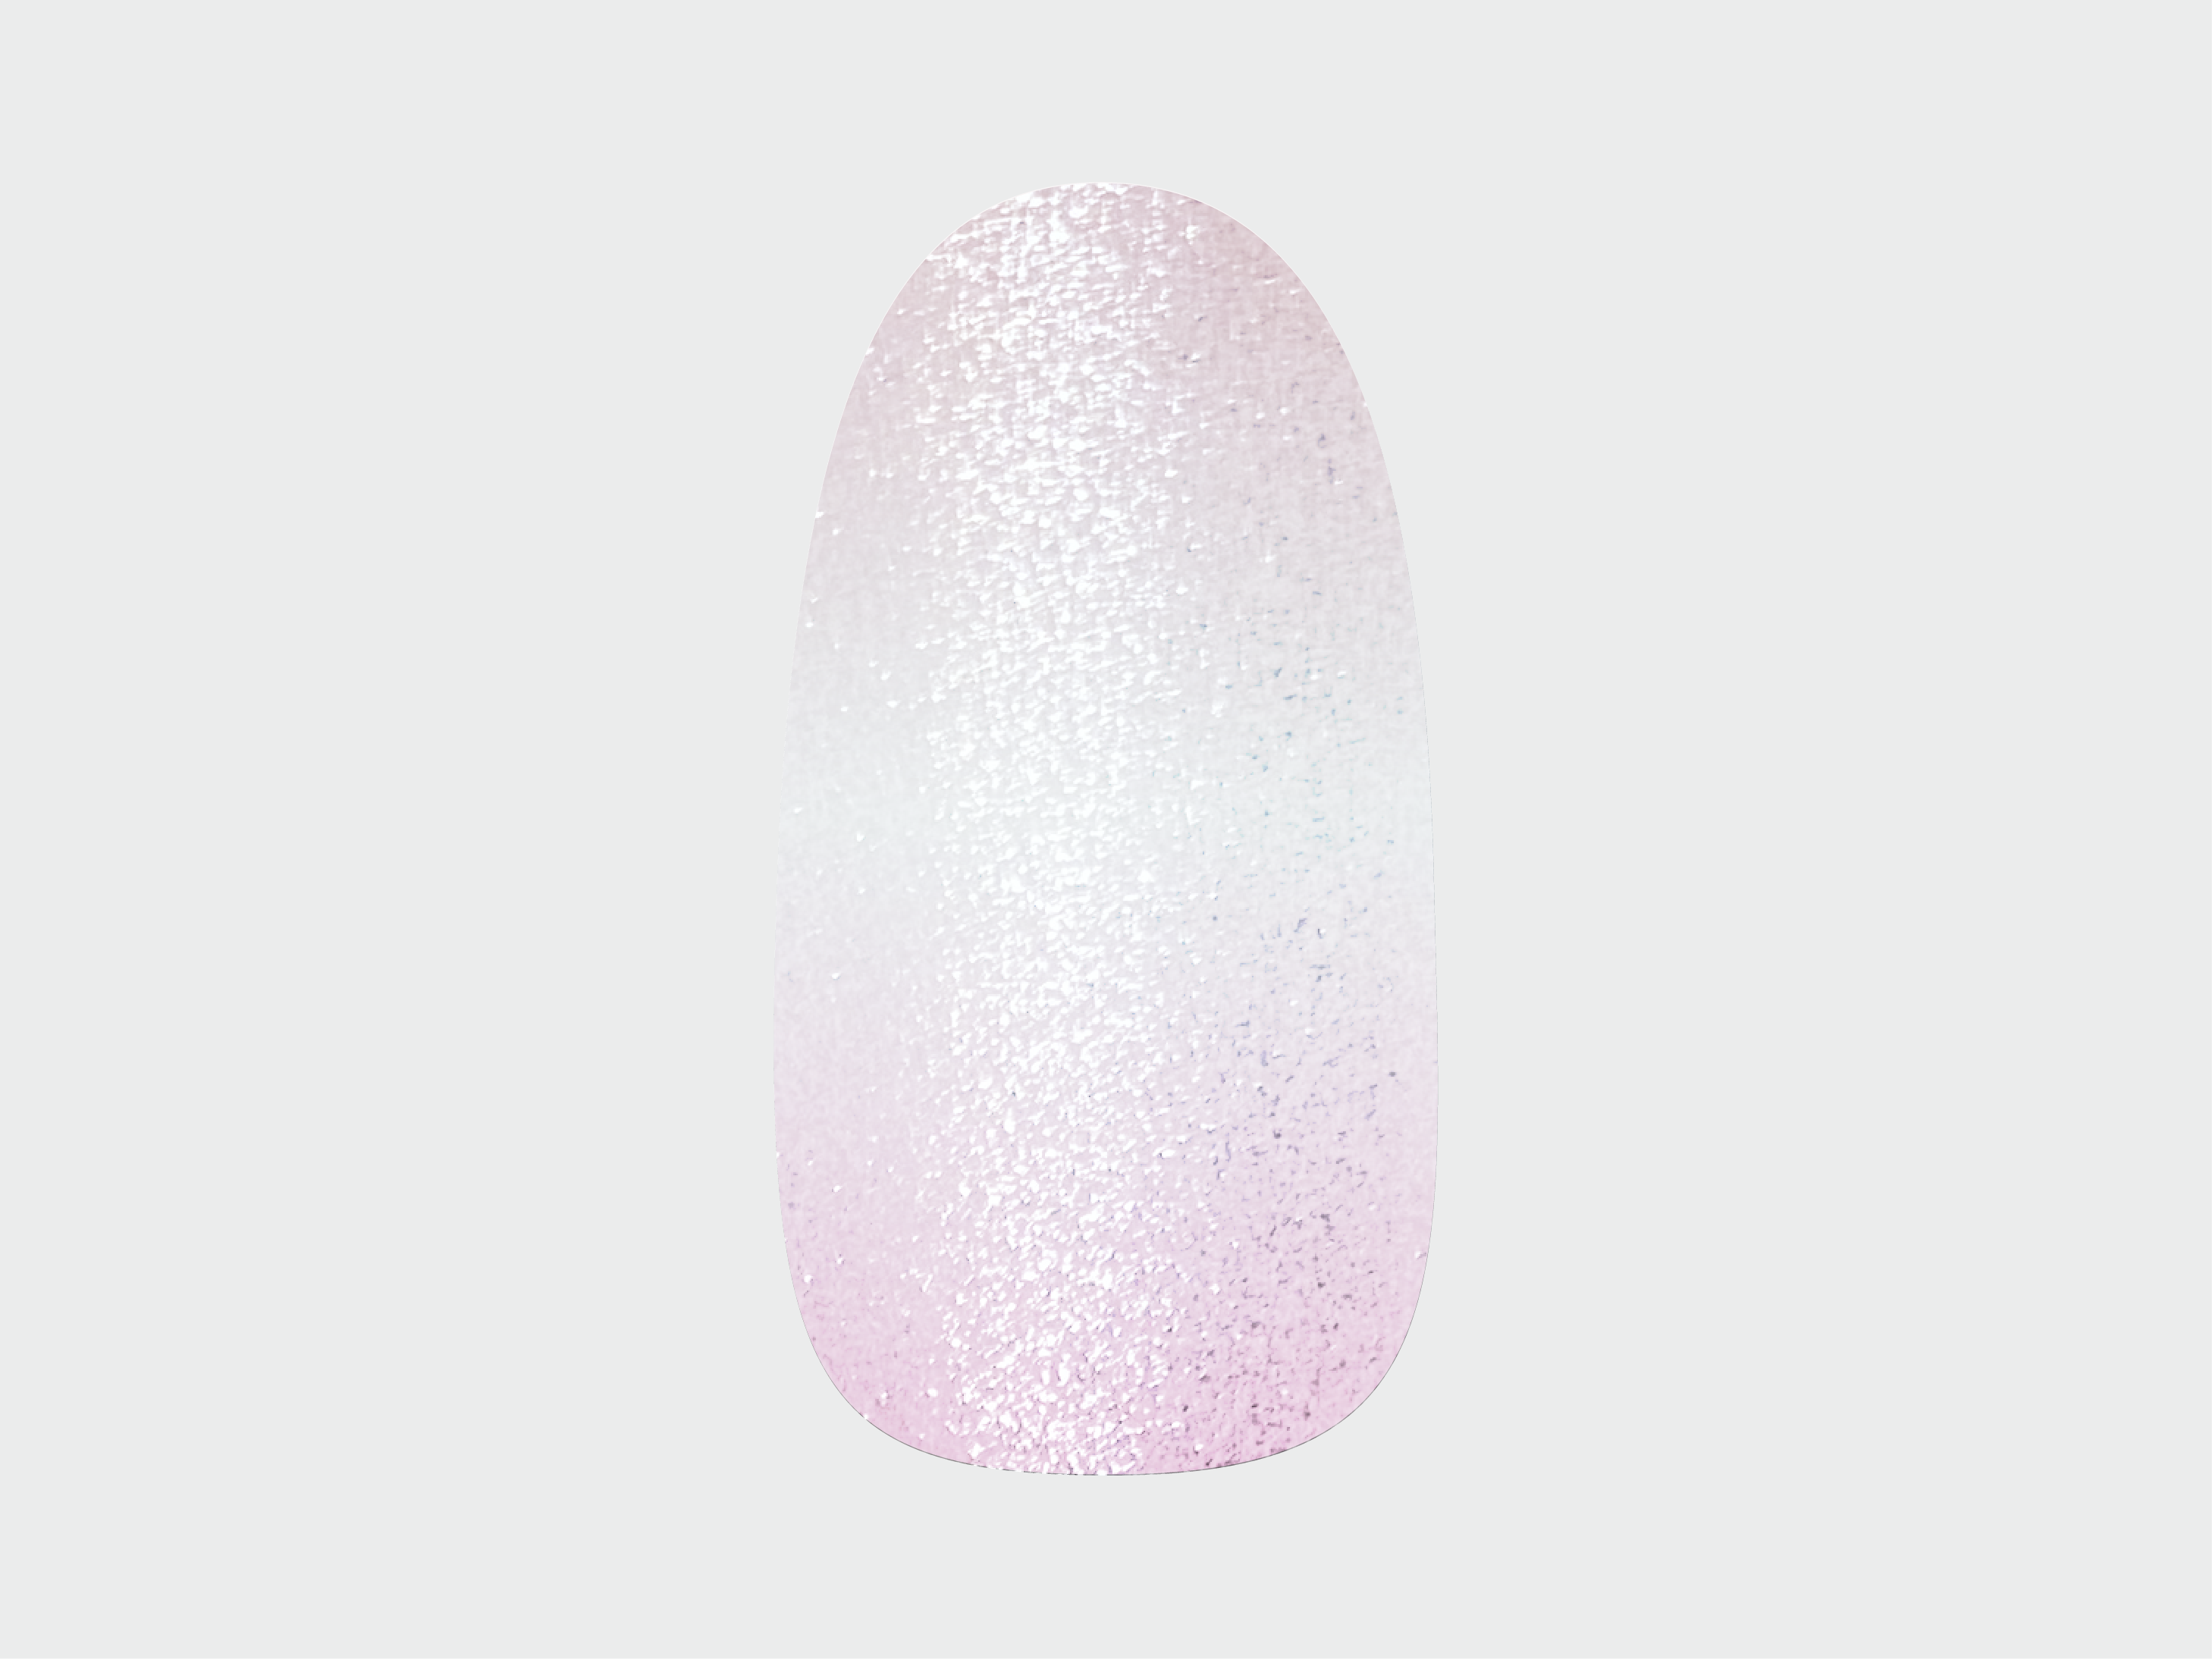 Shimmer Moon by Olcay Gulsen Maniac nails gellak stickers Manicure Nail Art Pink neutral glitters